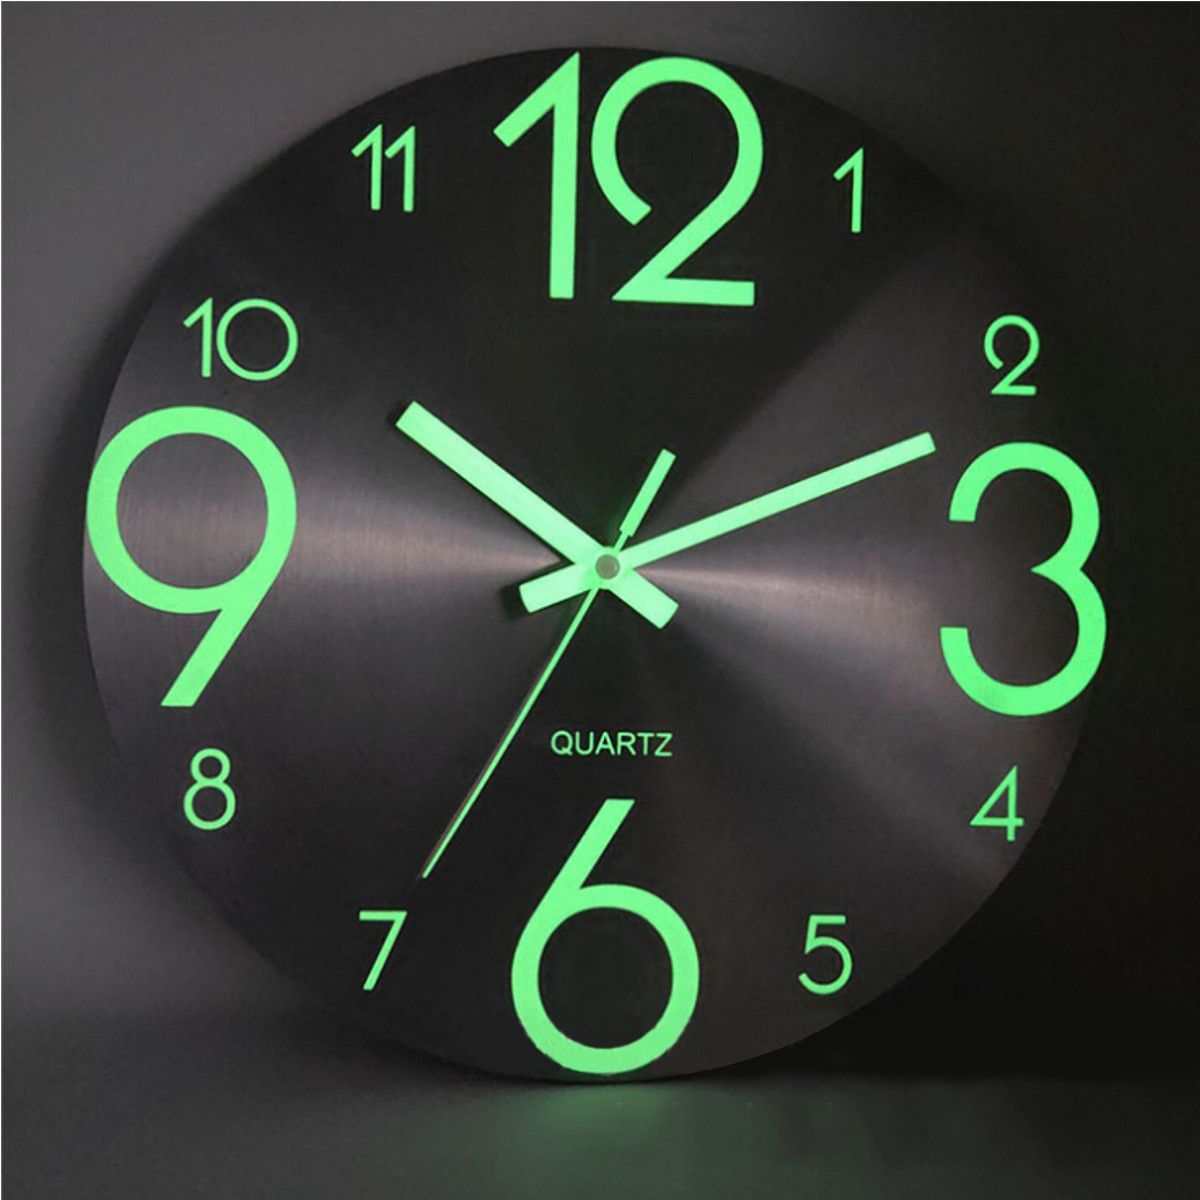 Luminous-Wall-Clock-Number-Quartz-Hanging-Clocks-Glow-In-The-Dark-Bedroom-Decor-1624962